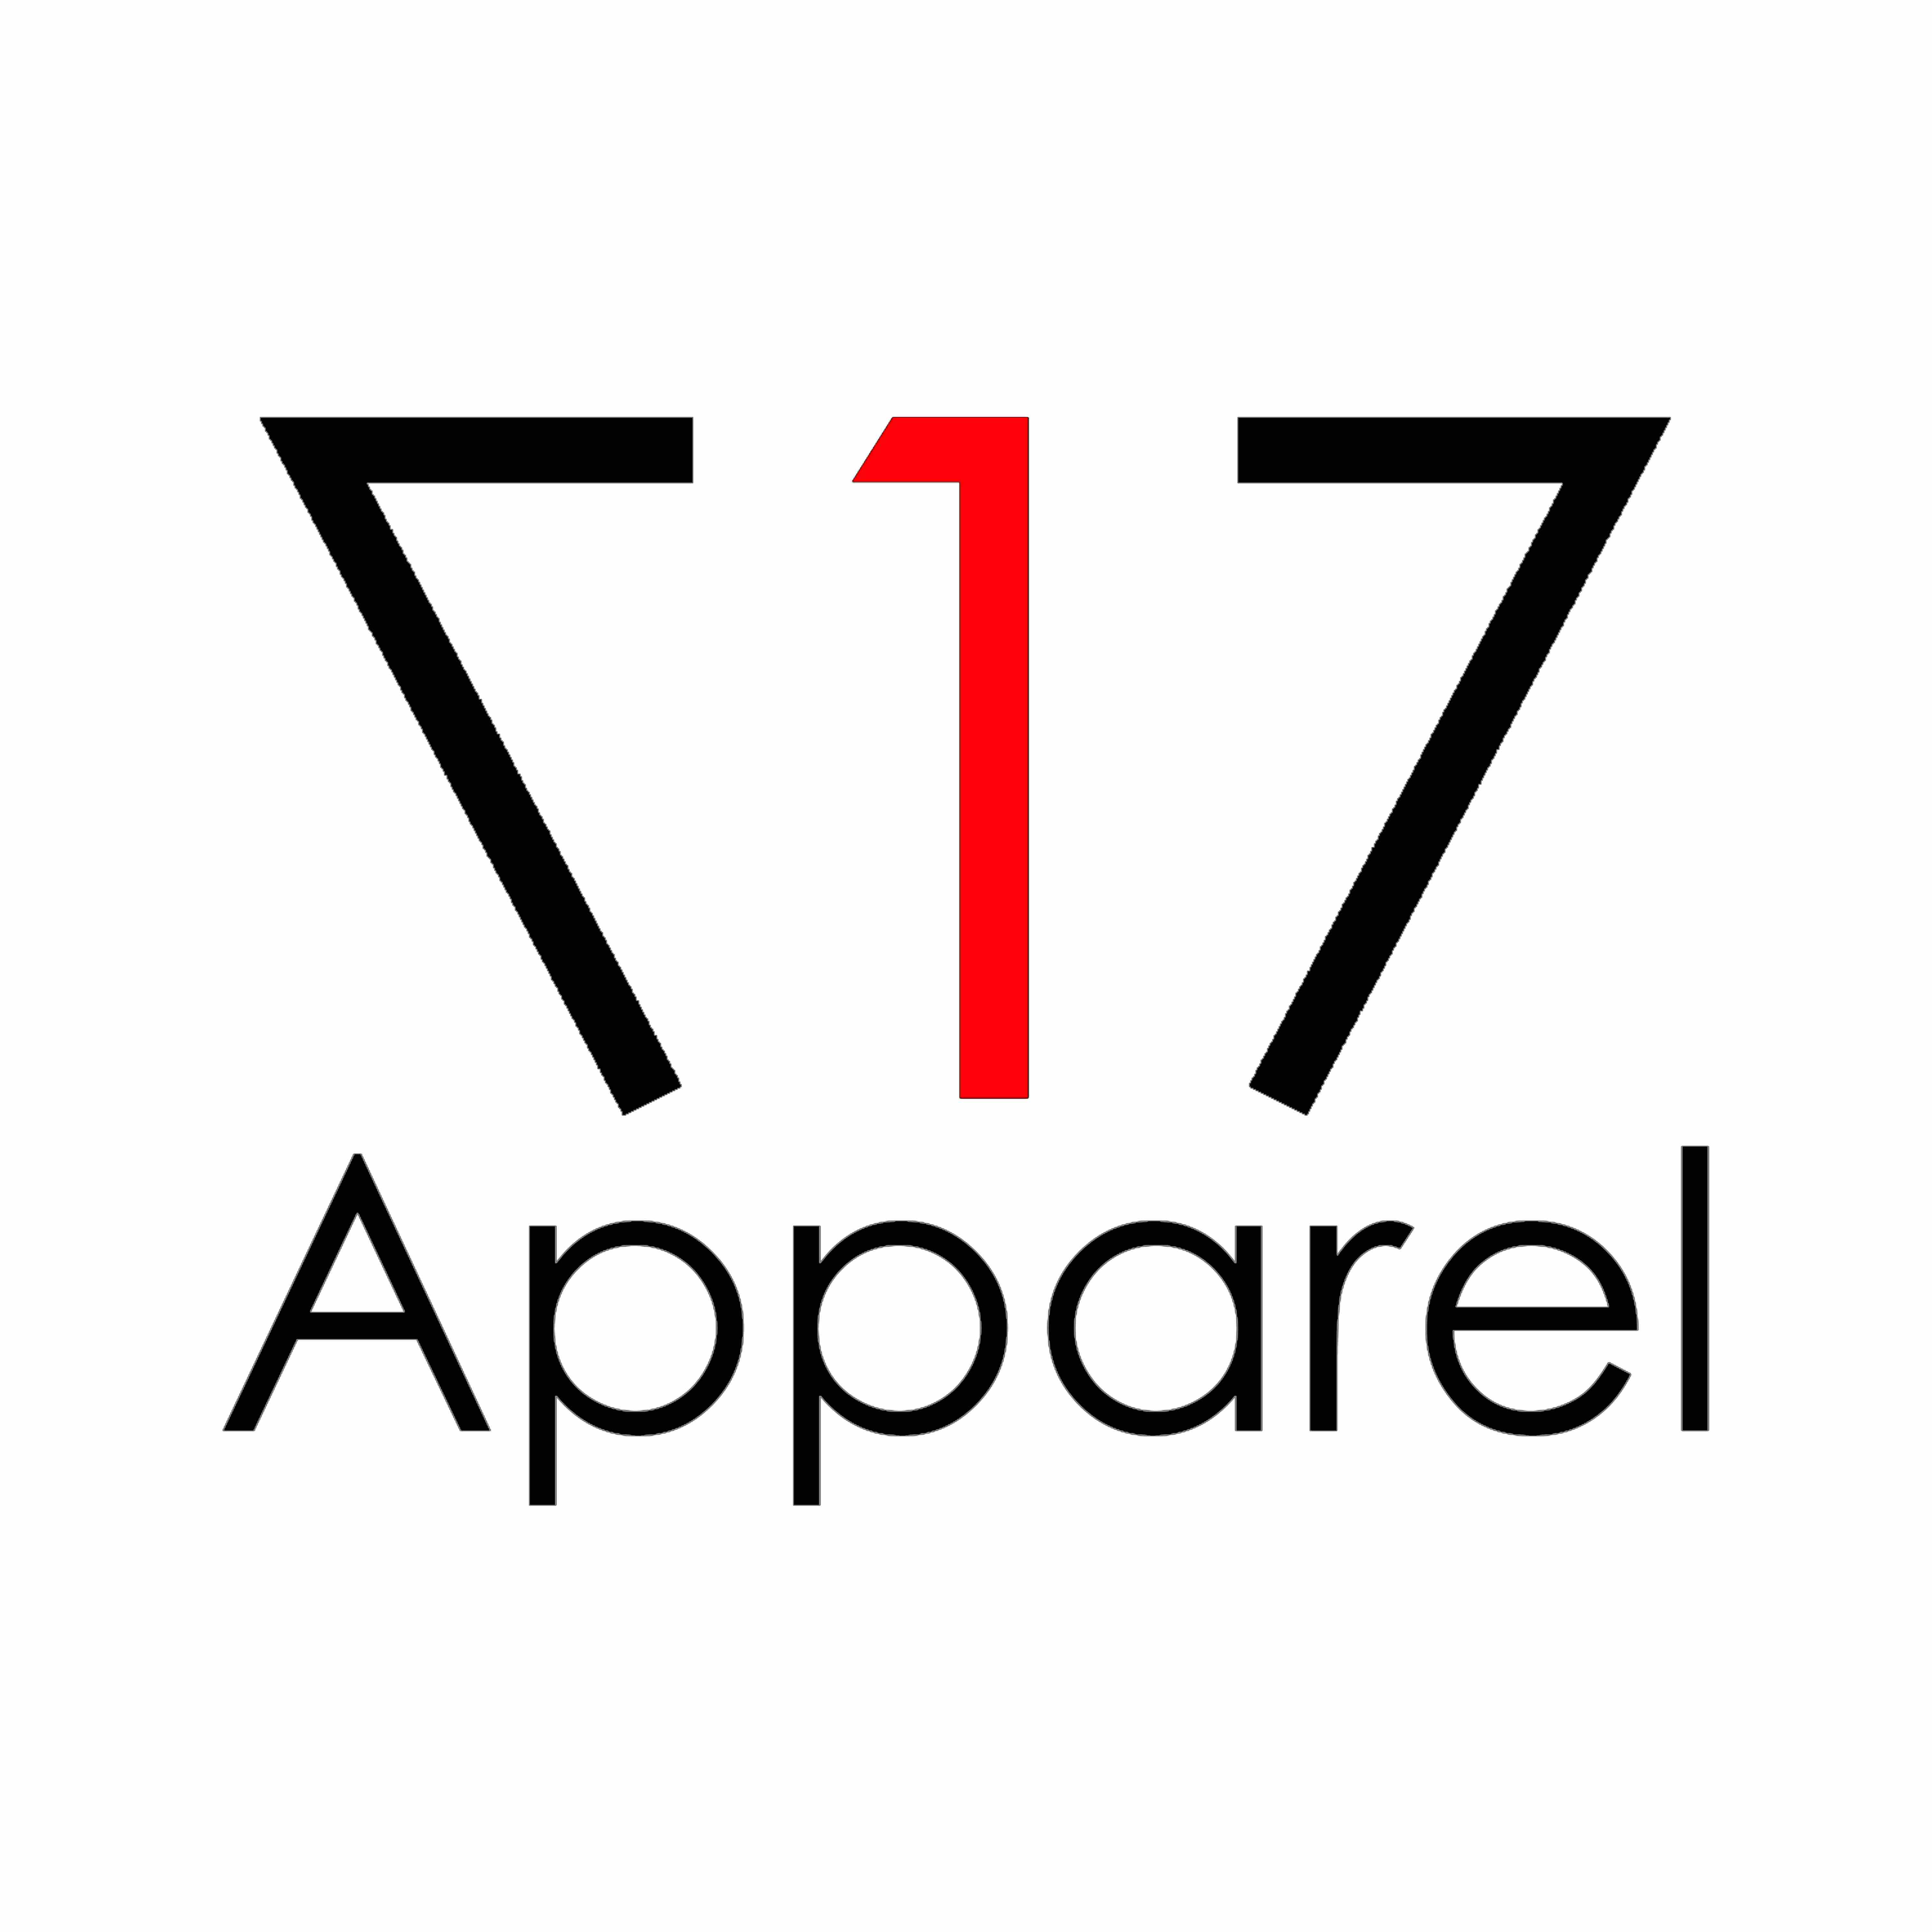 717 Apparel